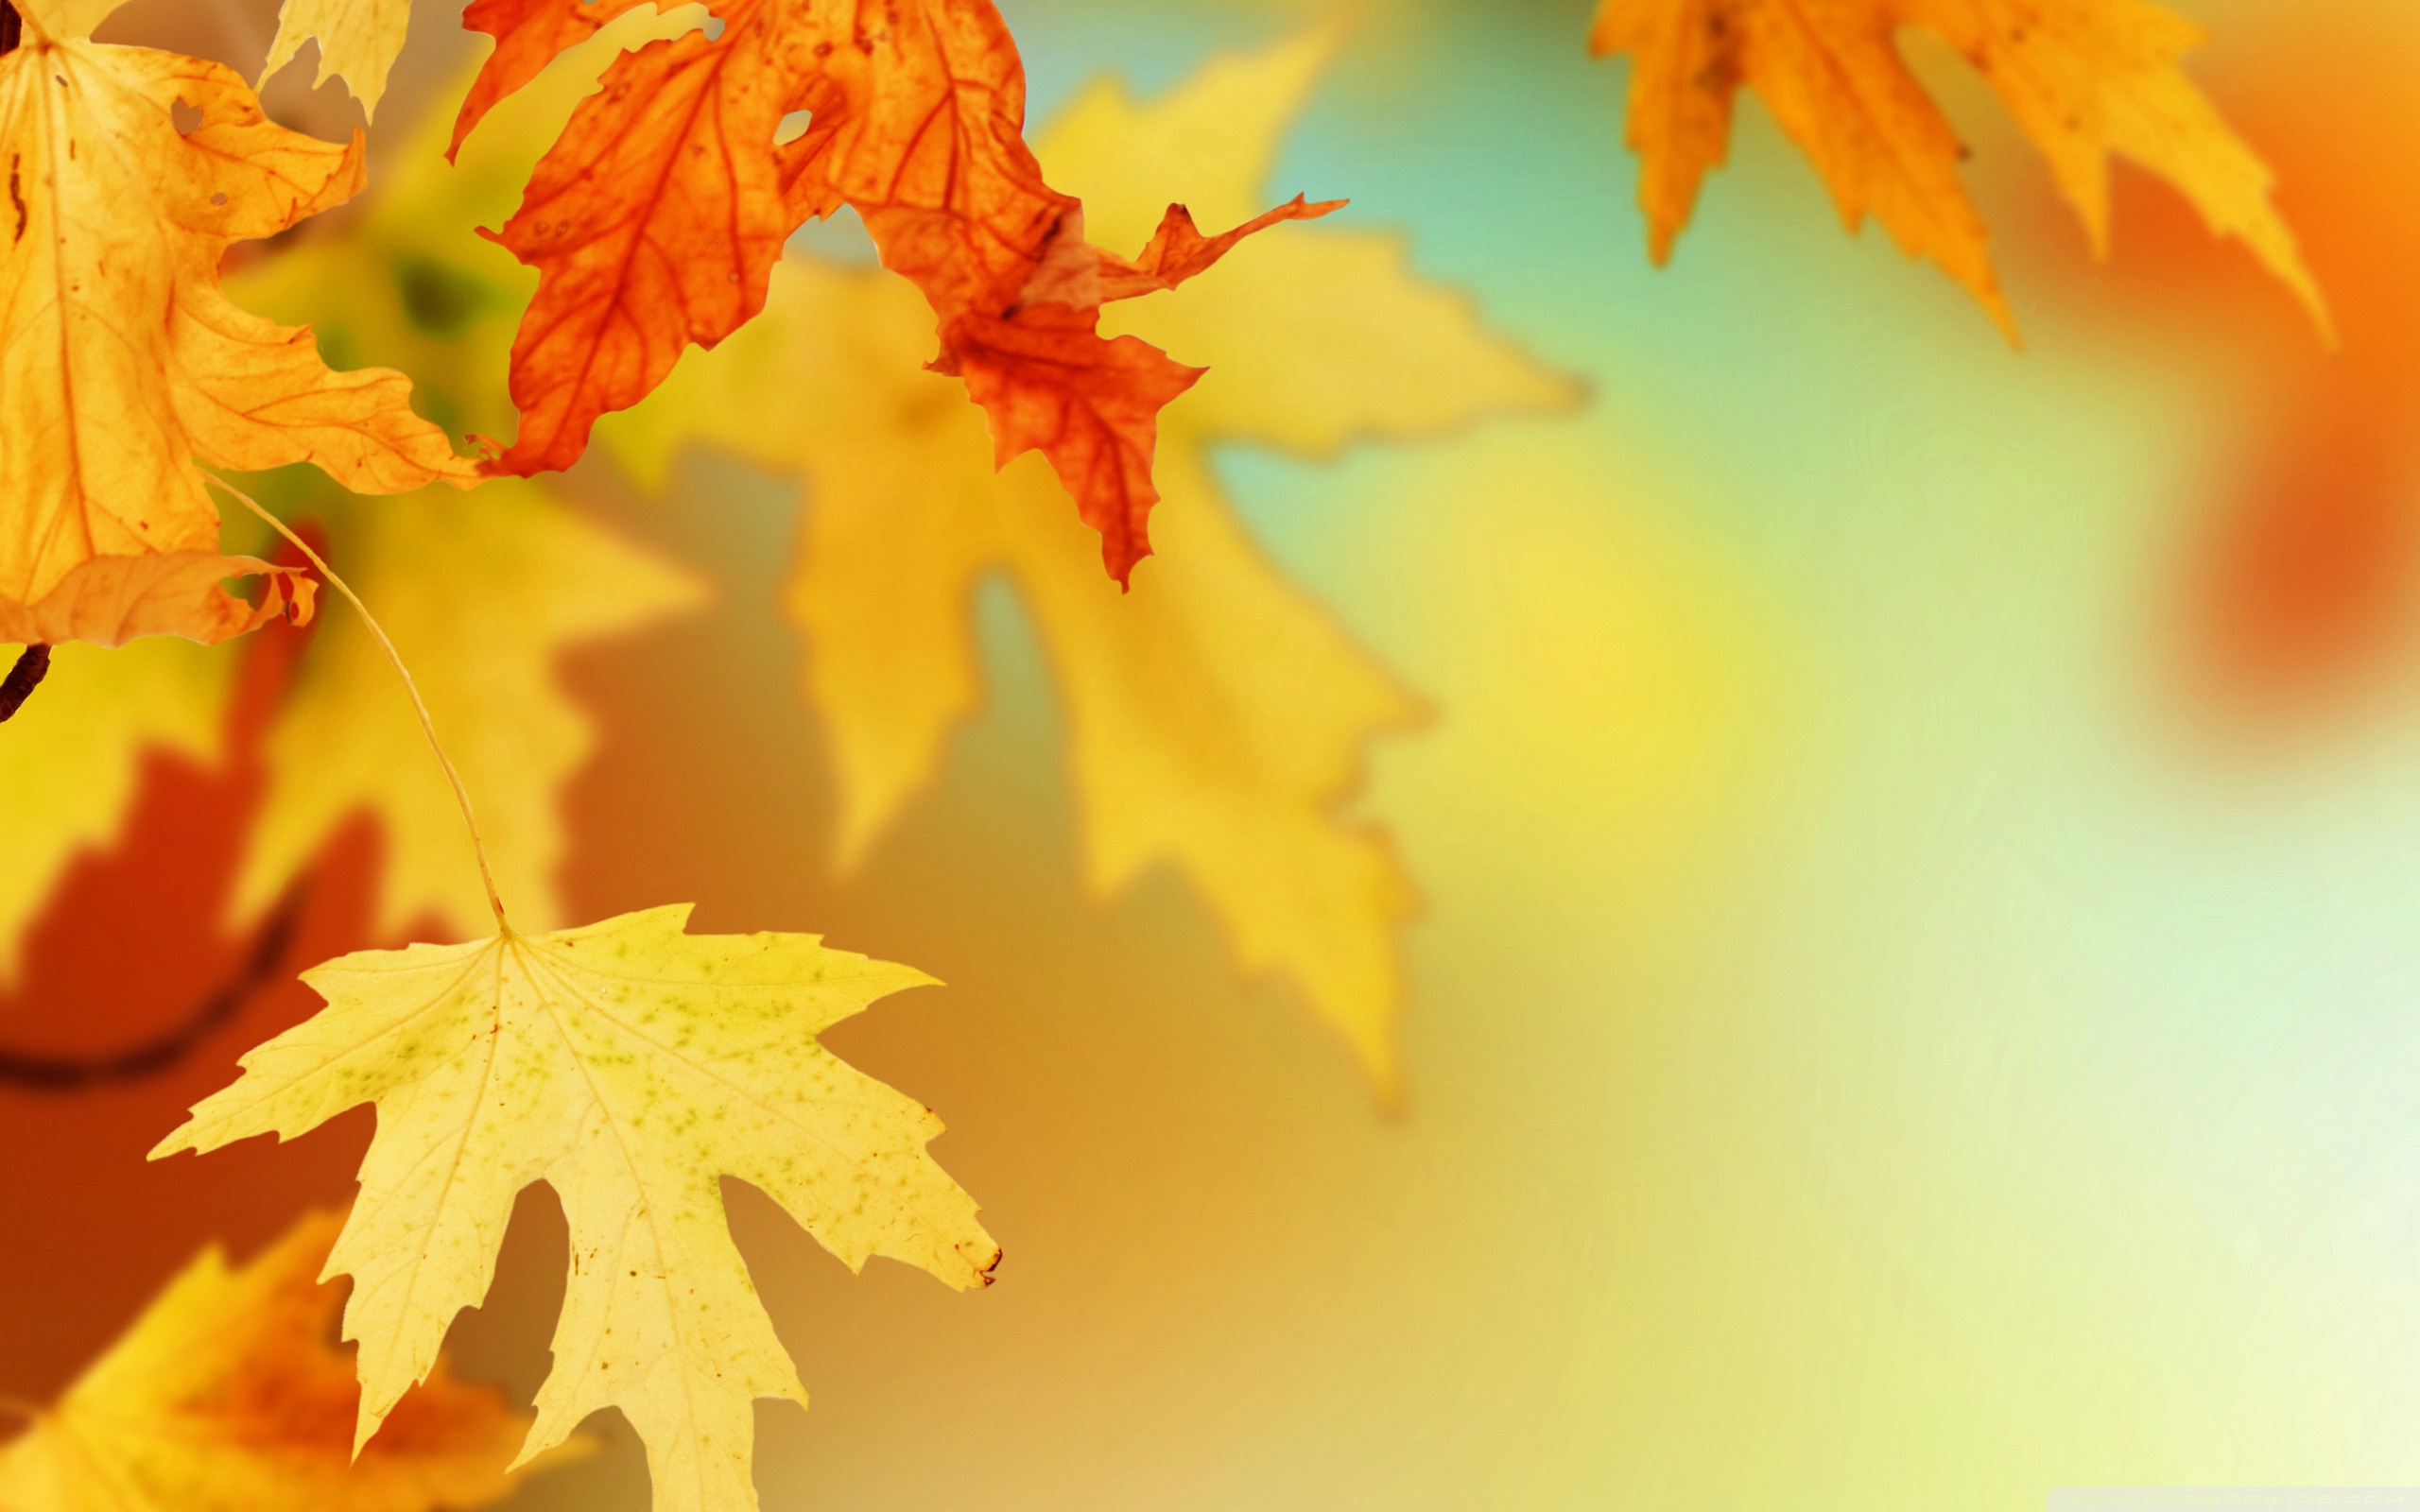 Golden leaves in this beautiful season - Autumn